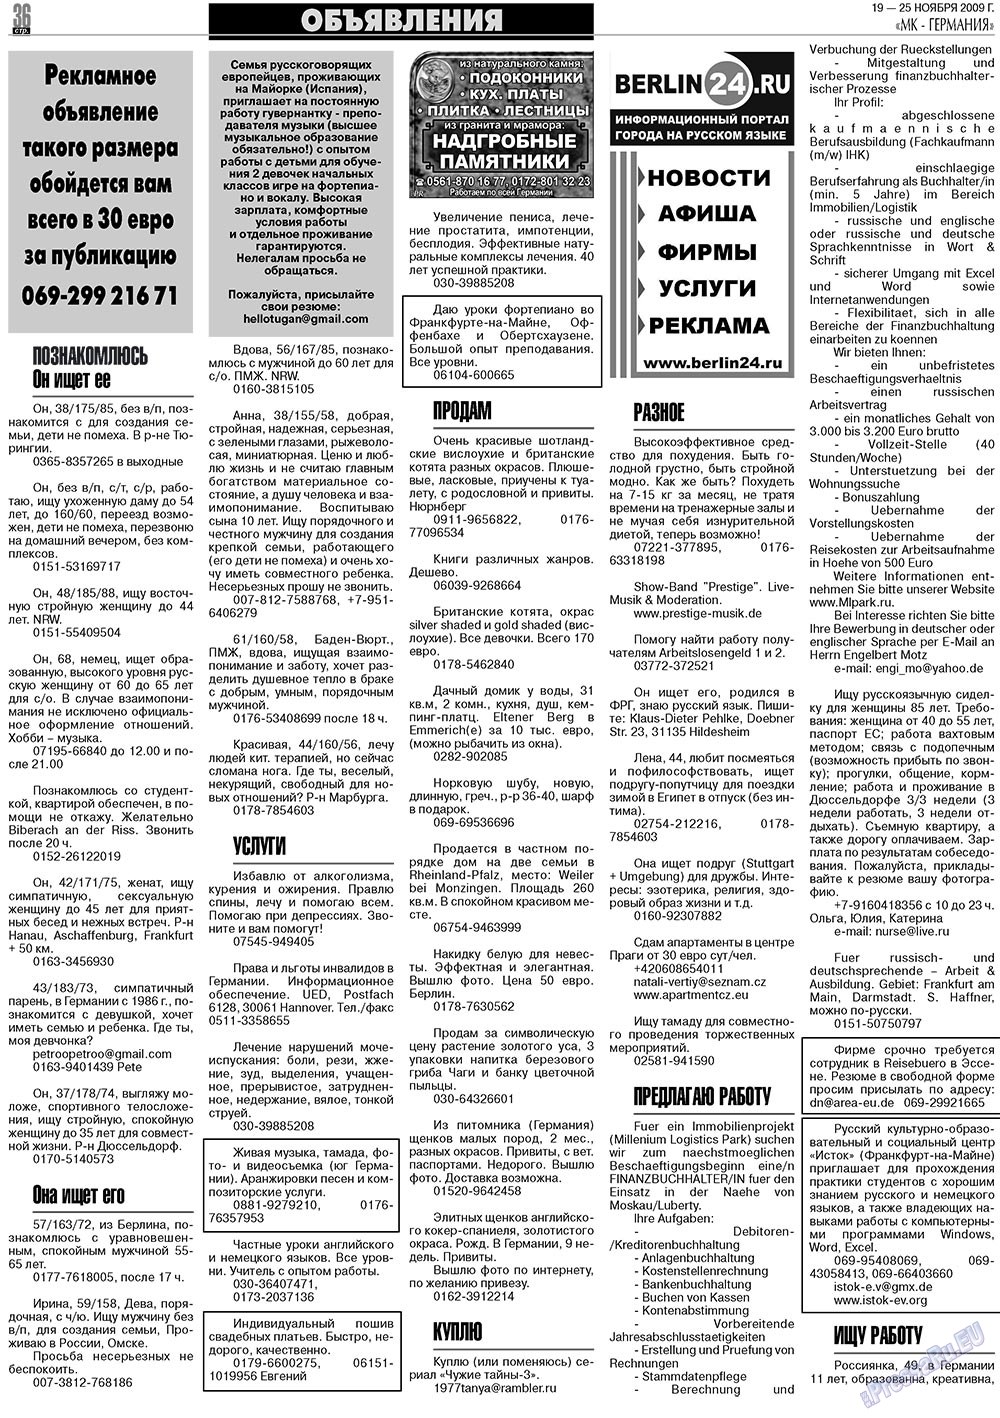 МК-Германия, газета. 2009 №47 стр.36